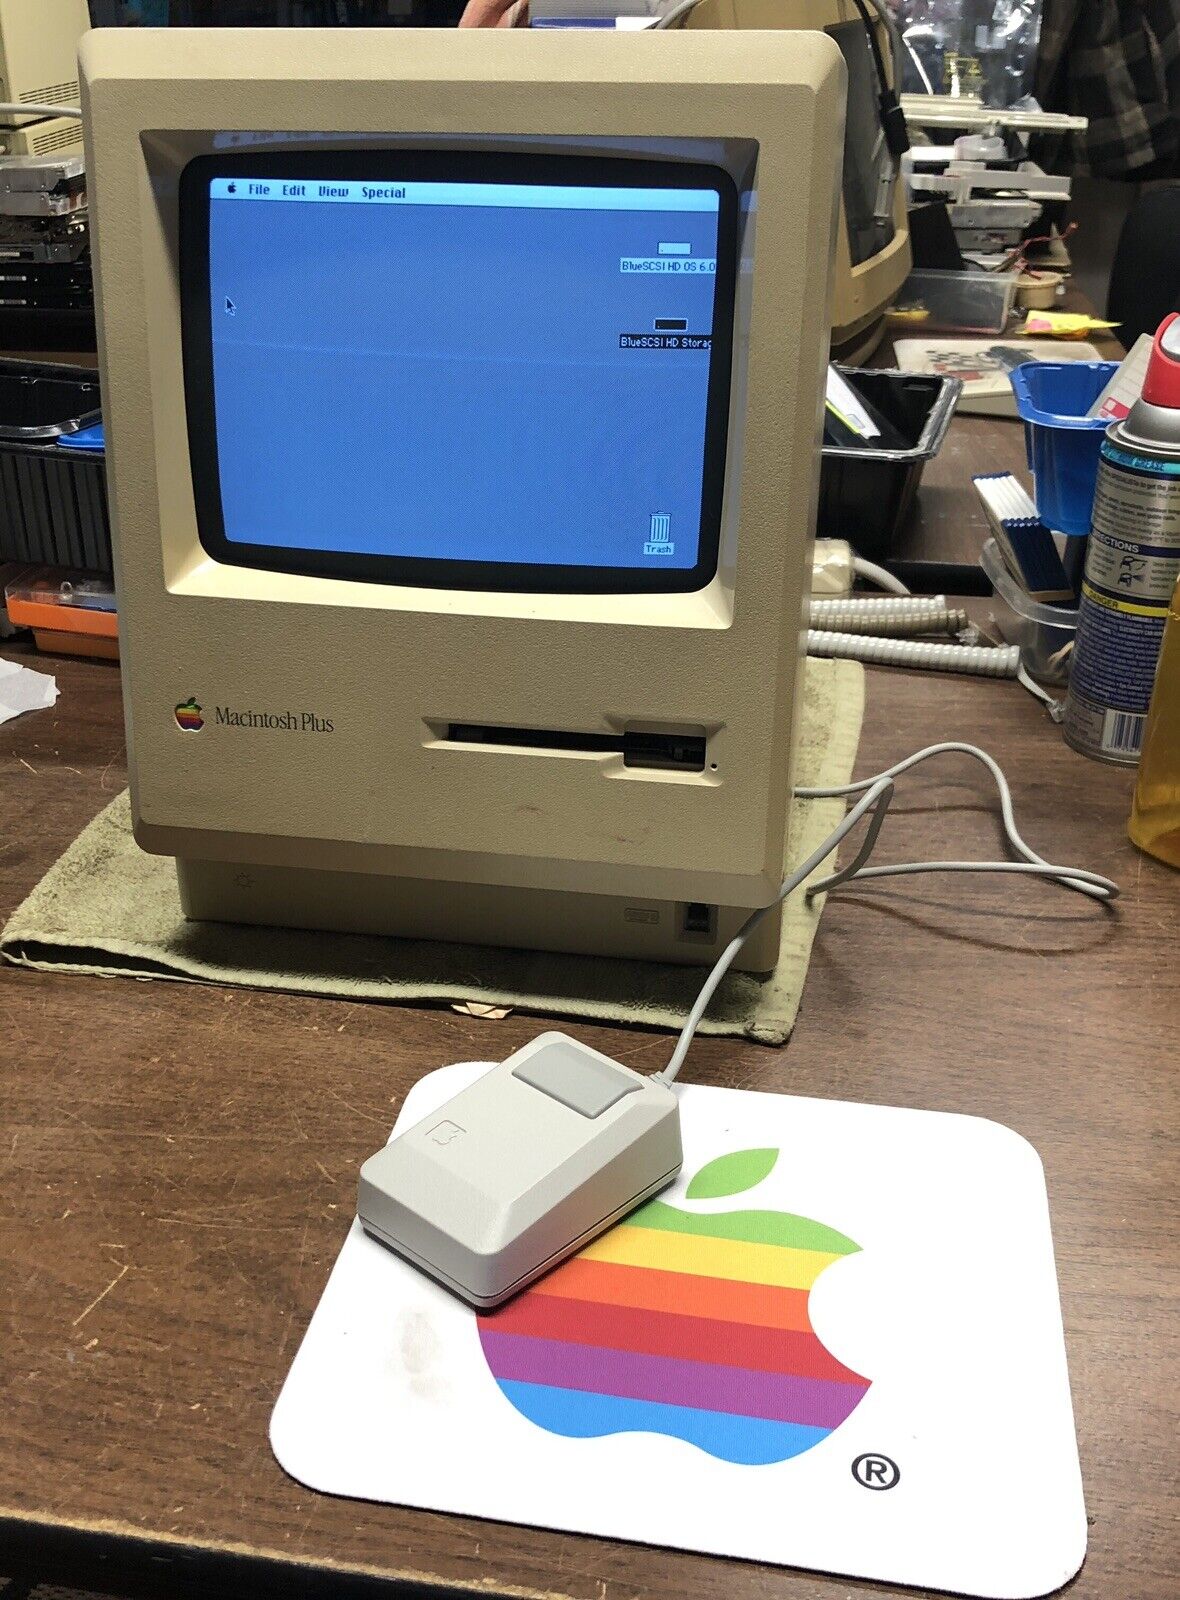 Macintosh Plus, BlueSCSI, OS 6.x, 4 mb memory - recapped, tested, working.